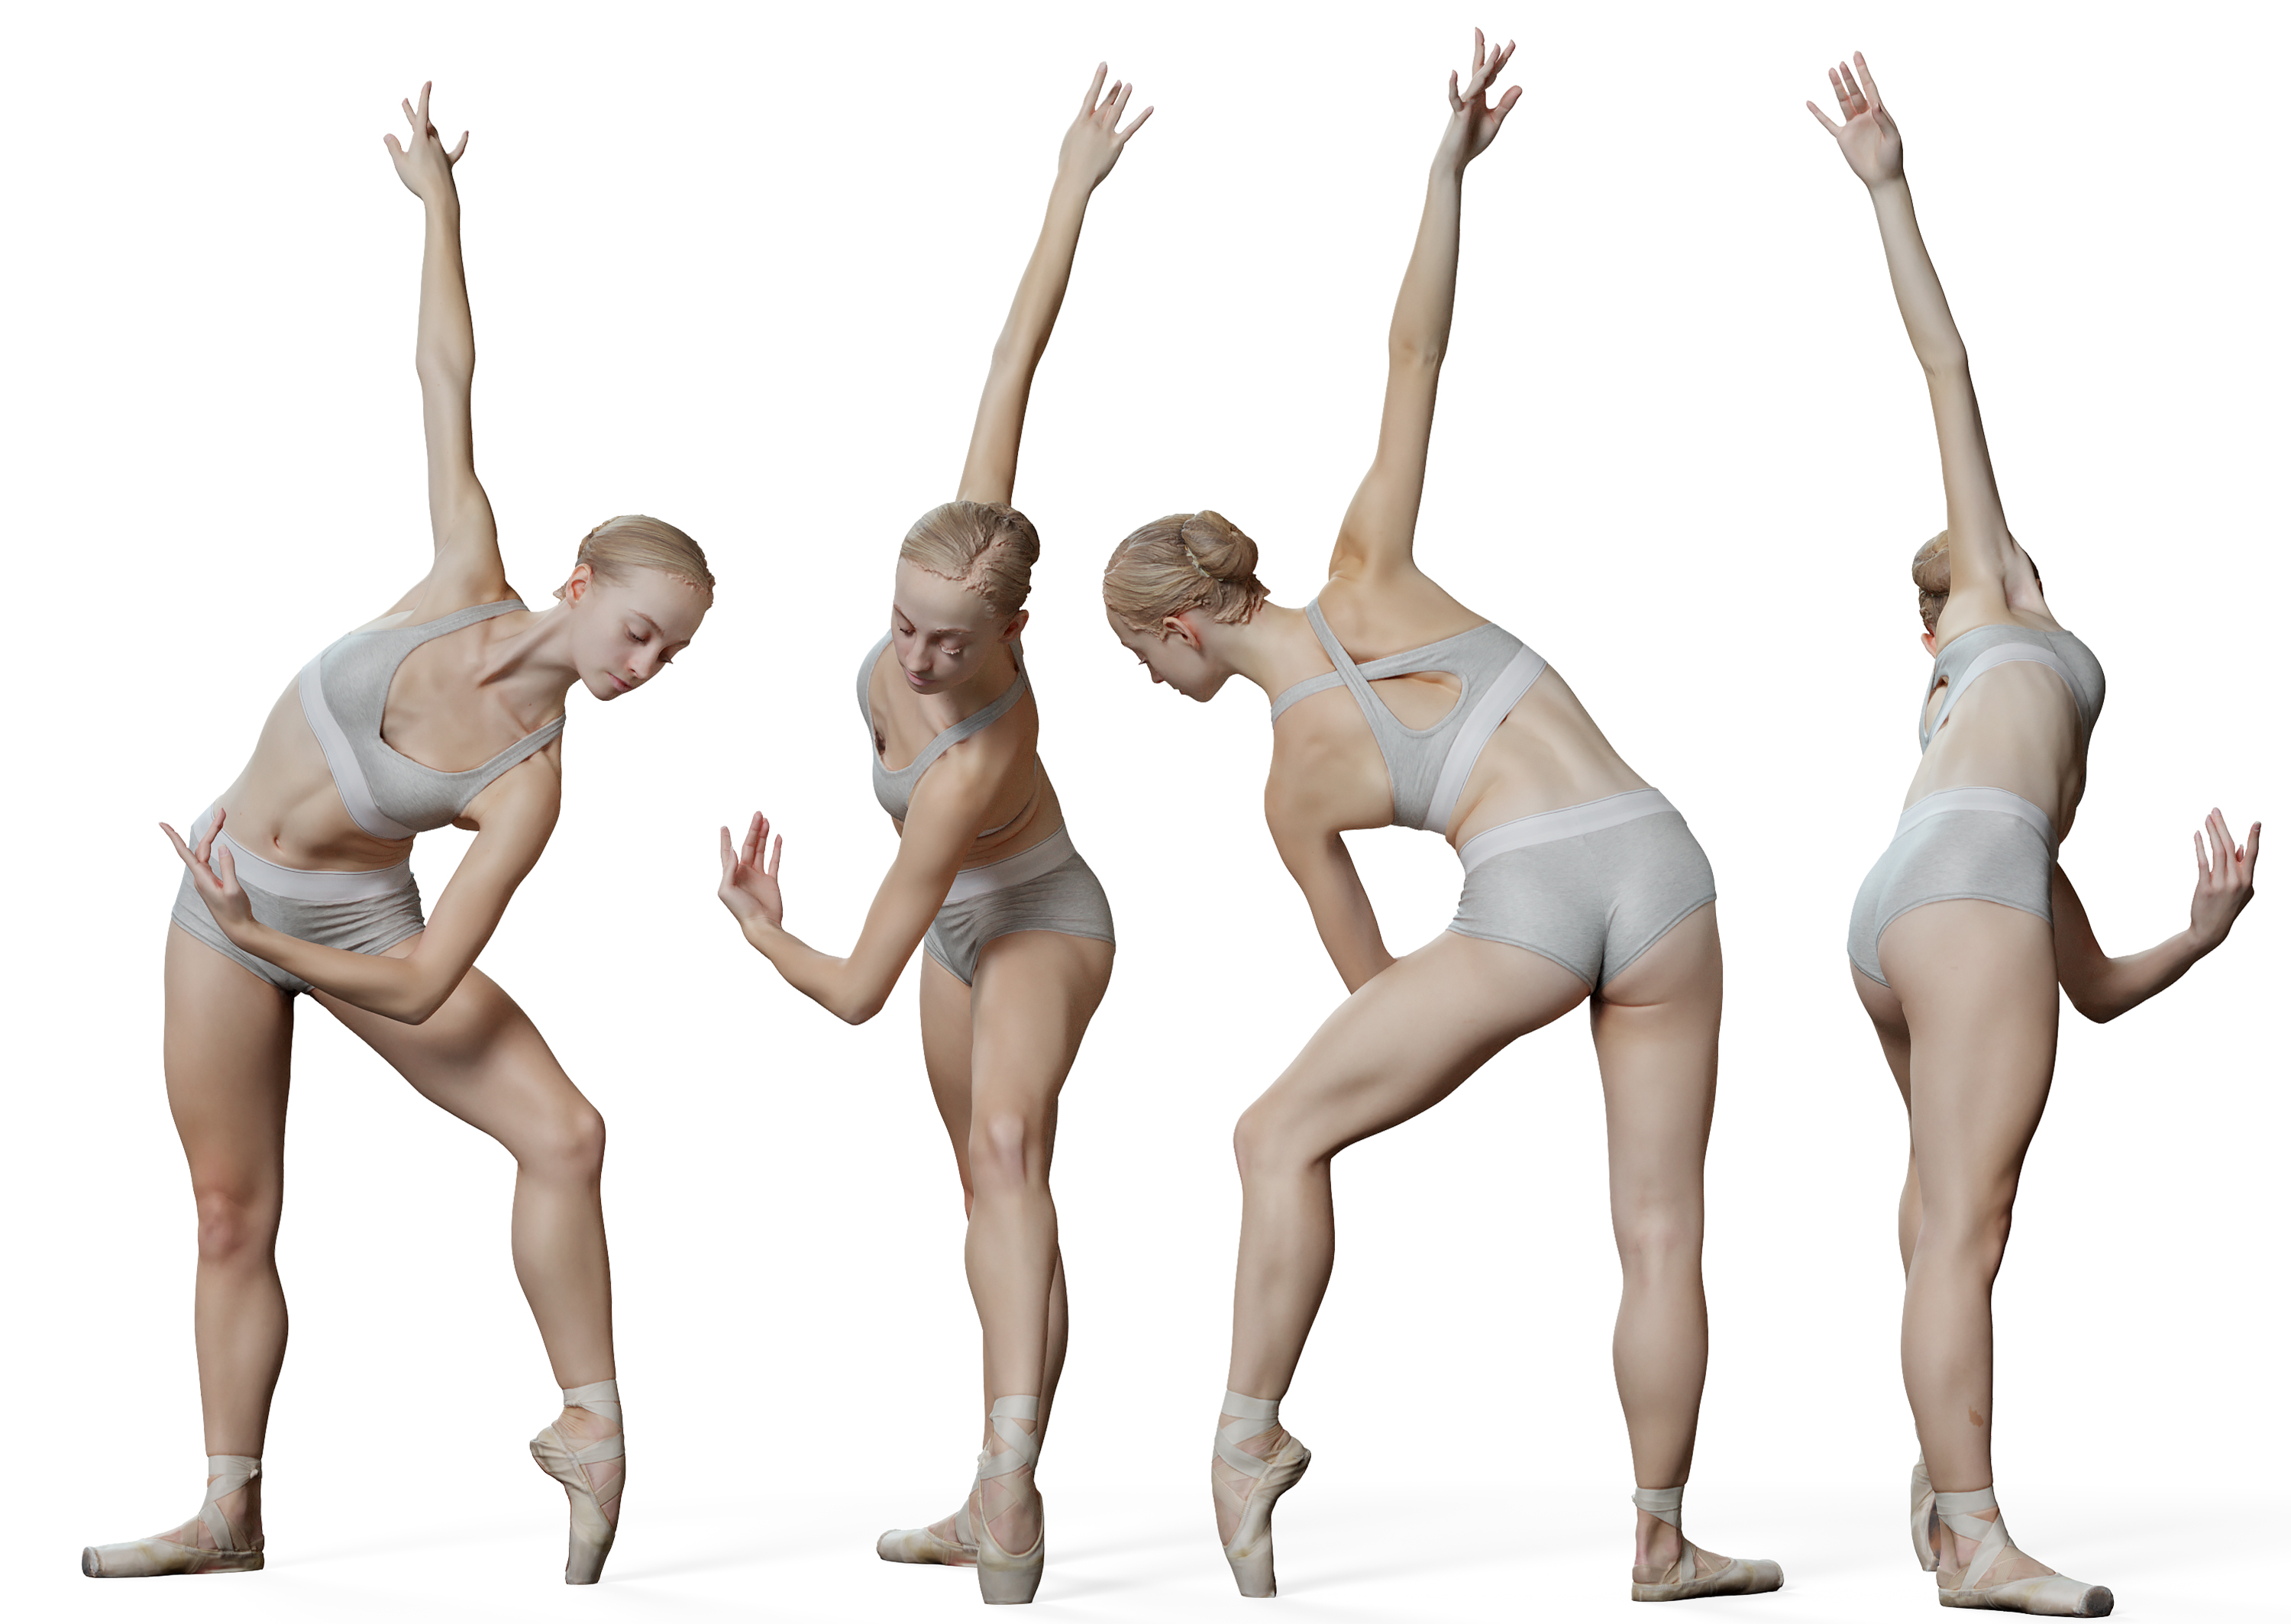 Andrea Paolini Merlo on LinkedIn: #ballet #balletphotography  #dancephotography #balletdancer #dancers…